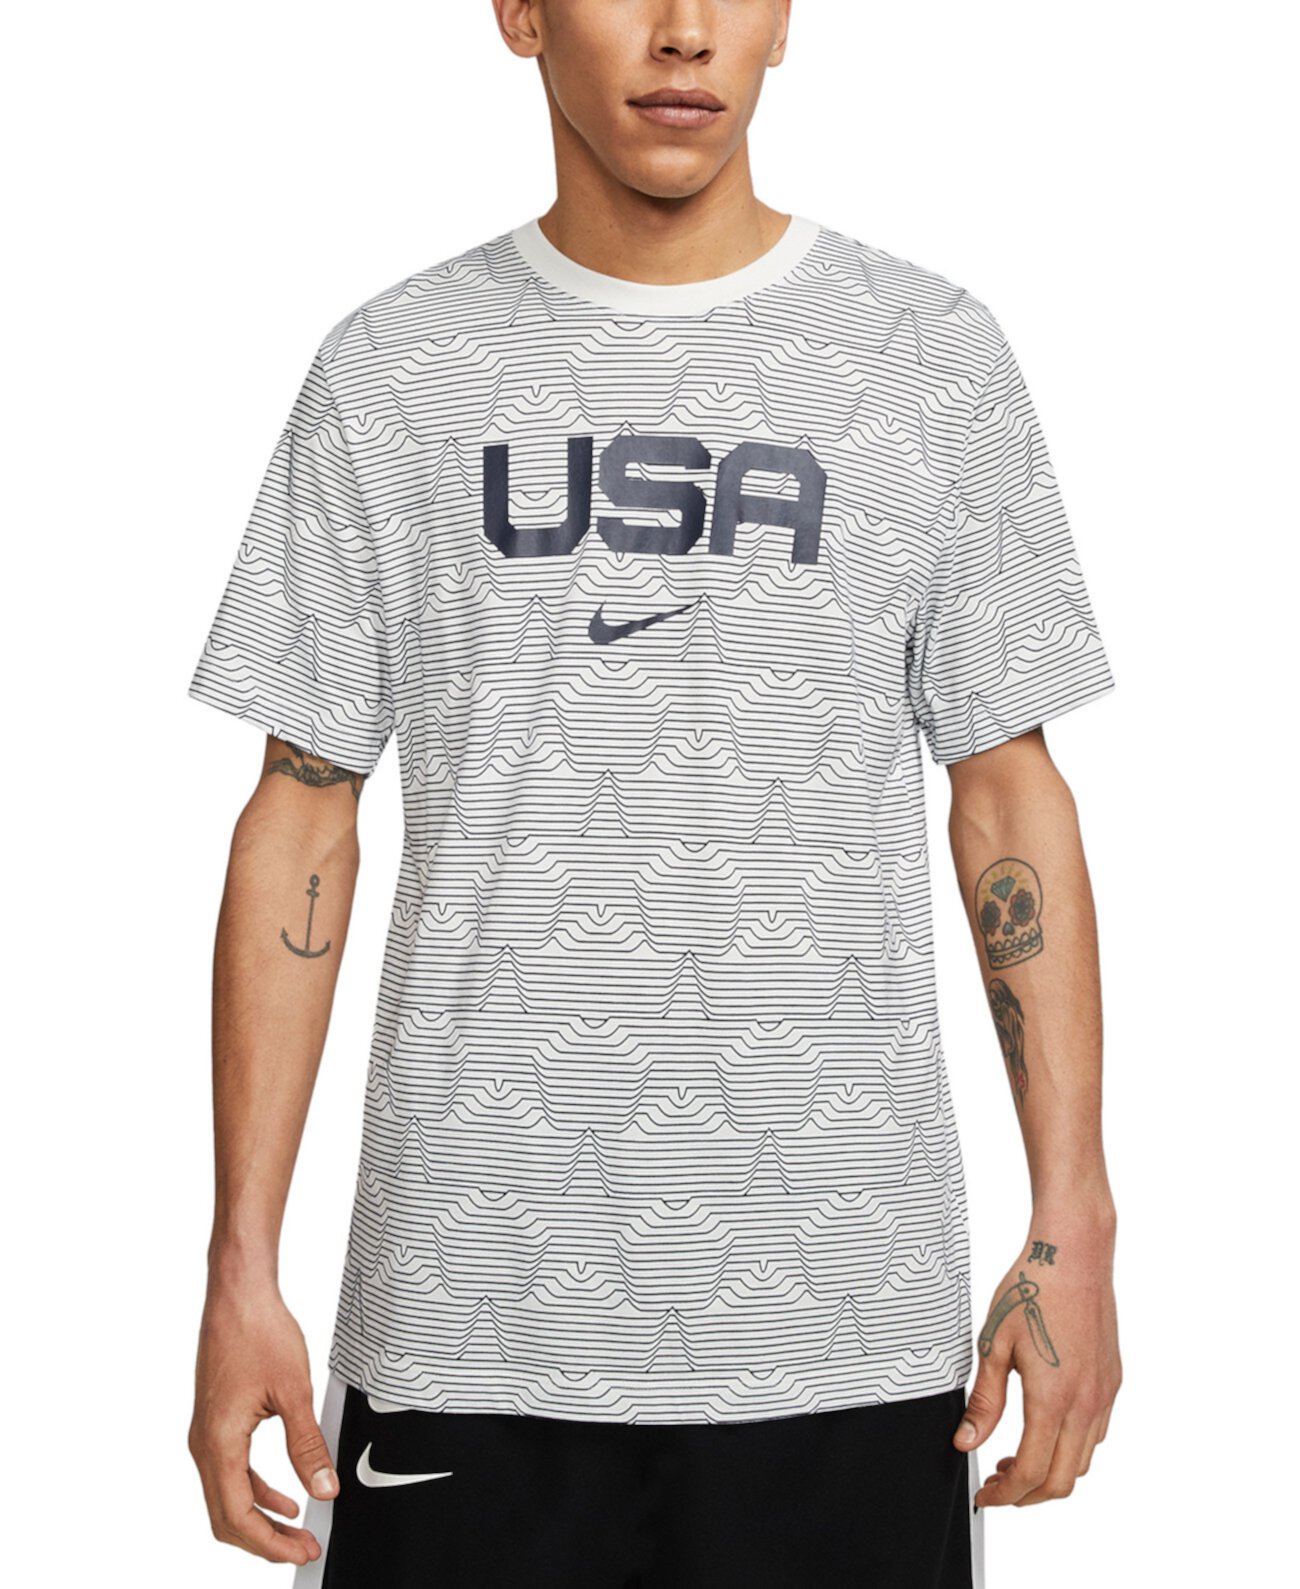 Мужская футболка с принтом USA Allover Nike